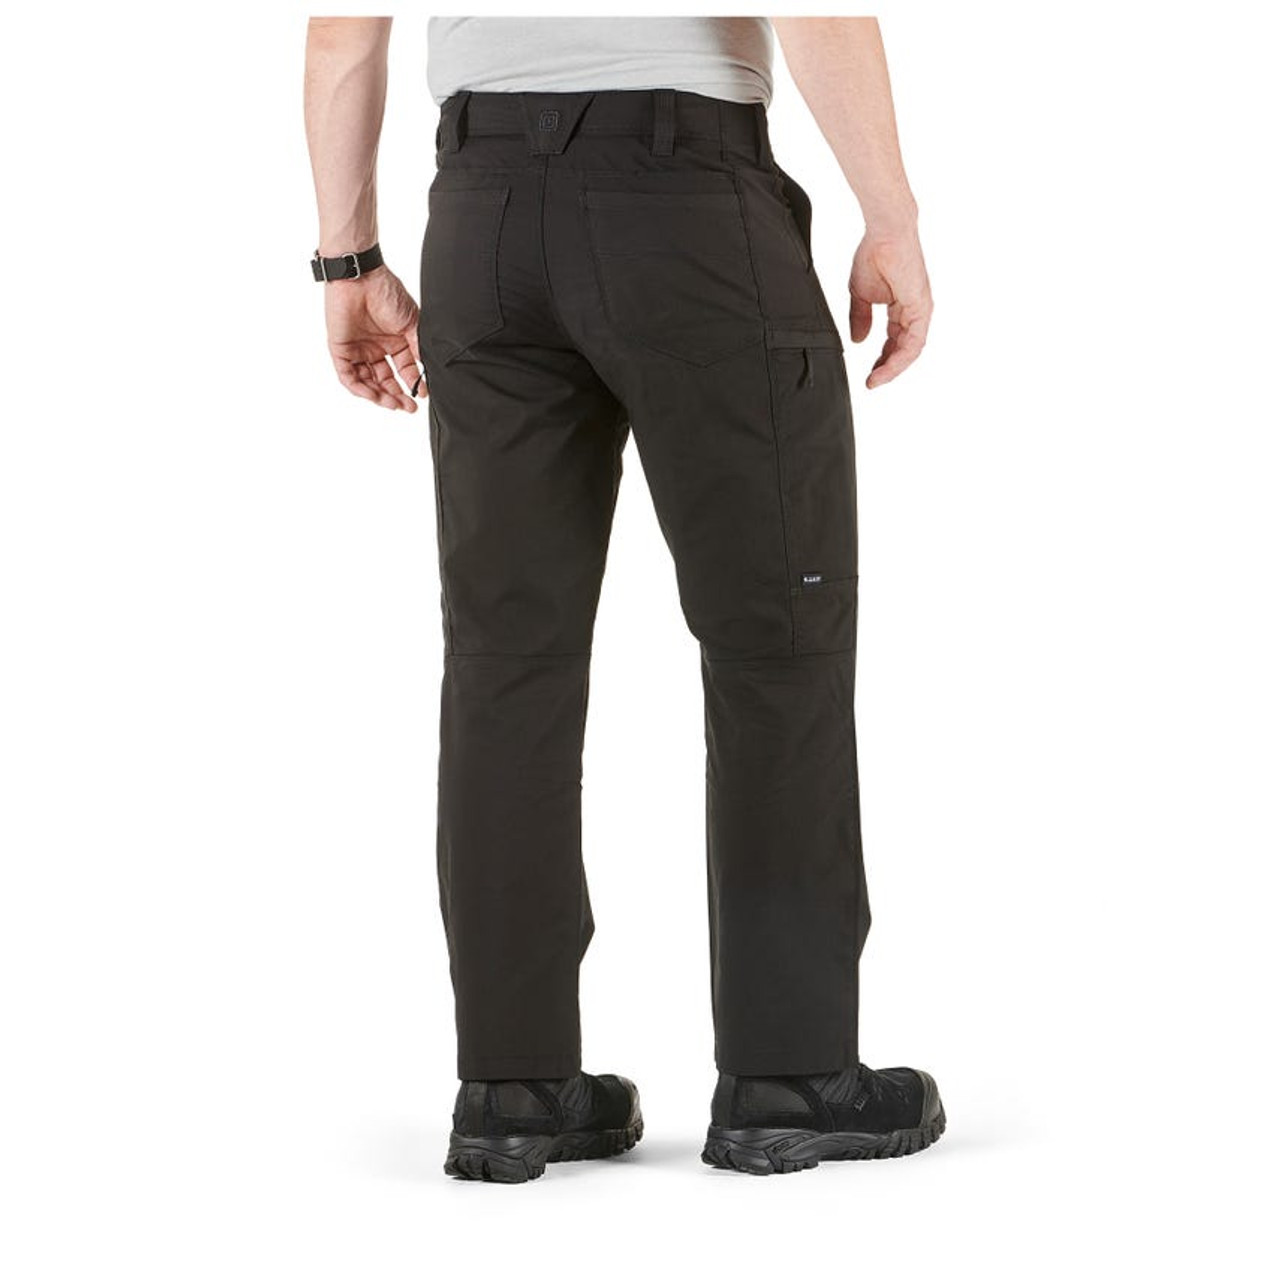 Apex Pant: High-Performance Tactical Pants